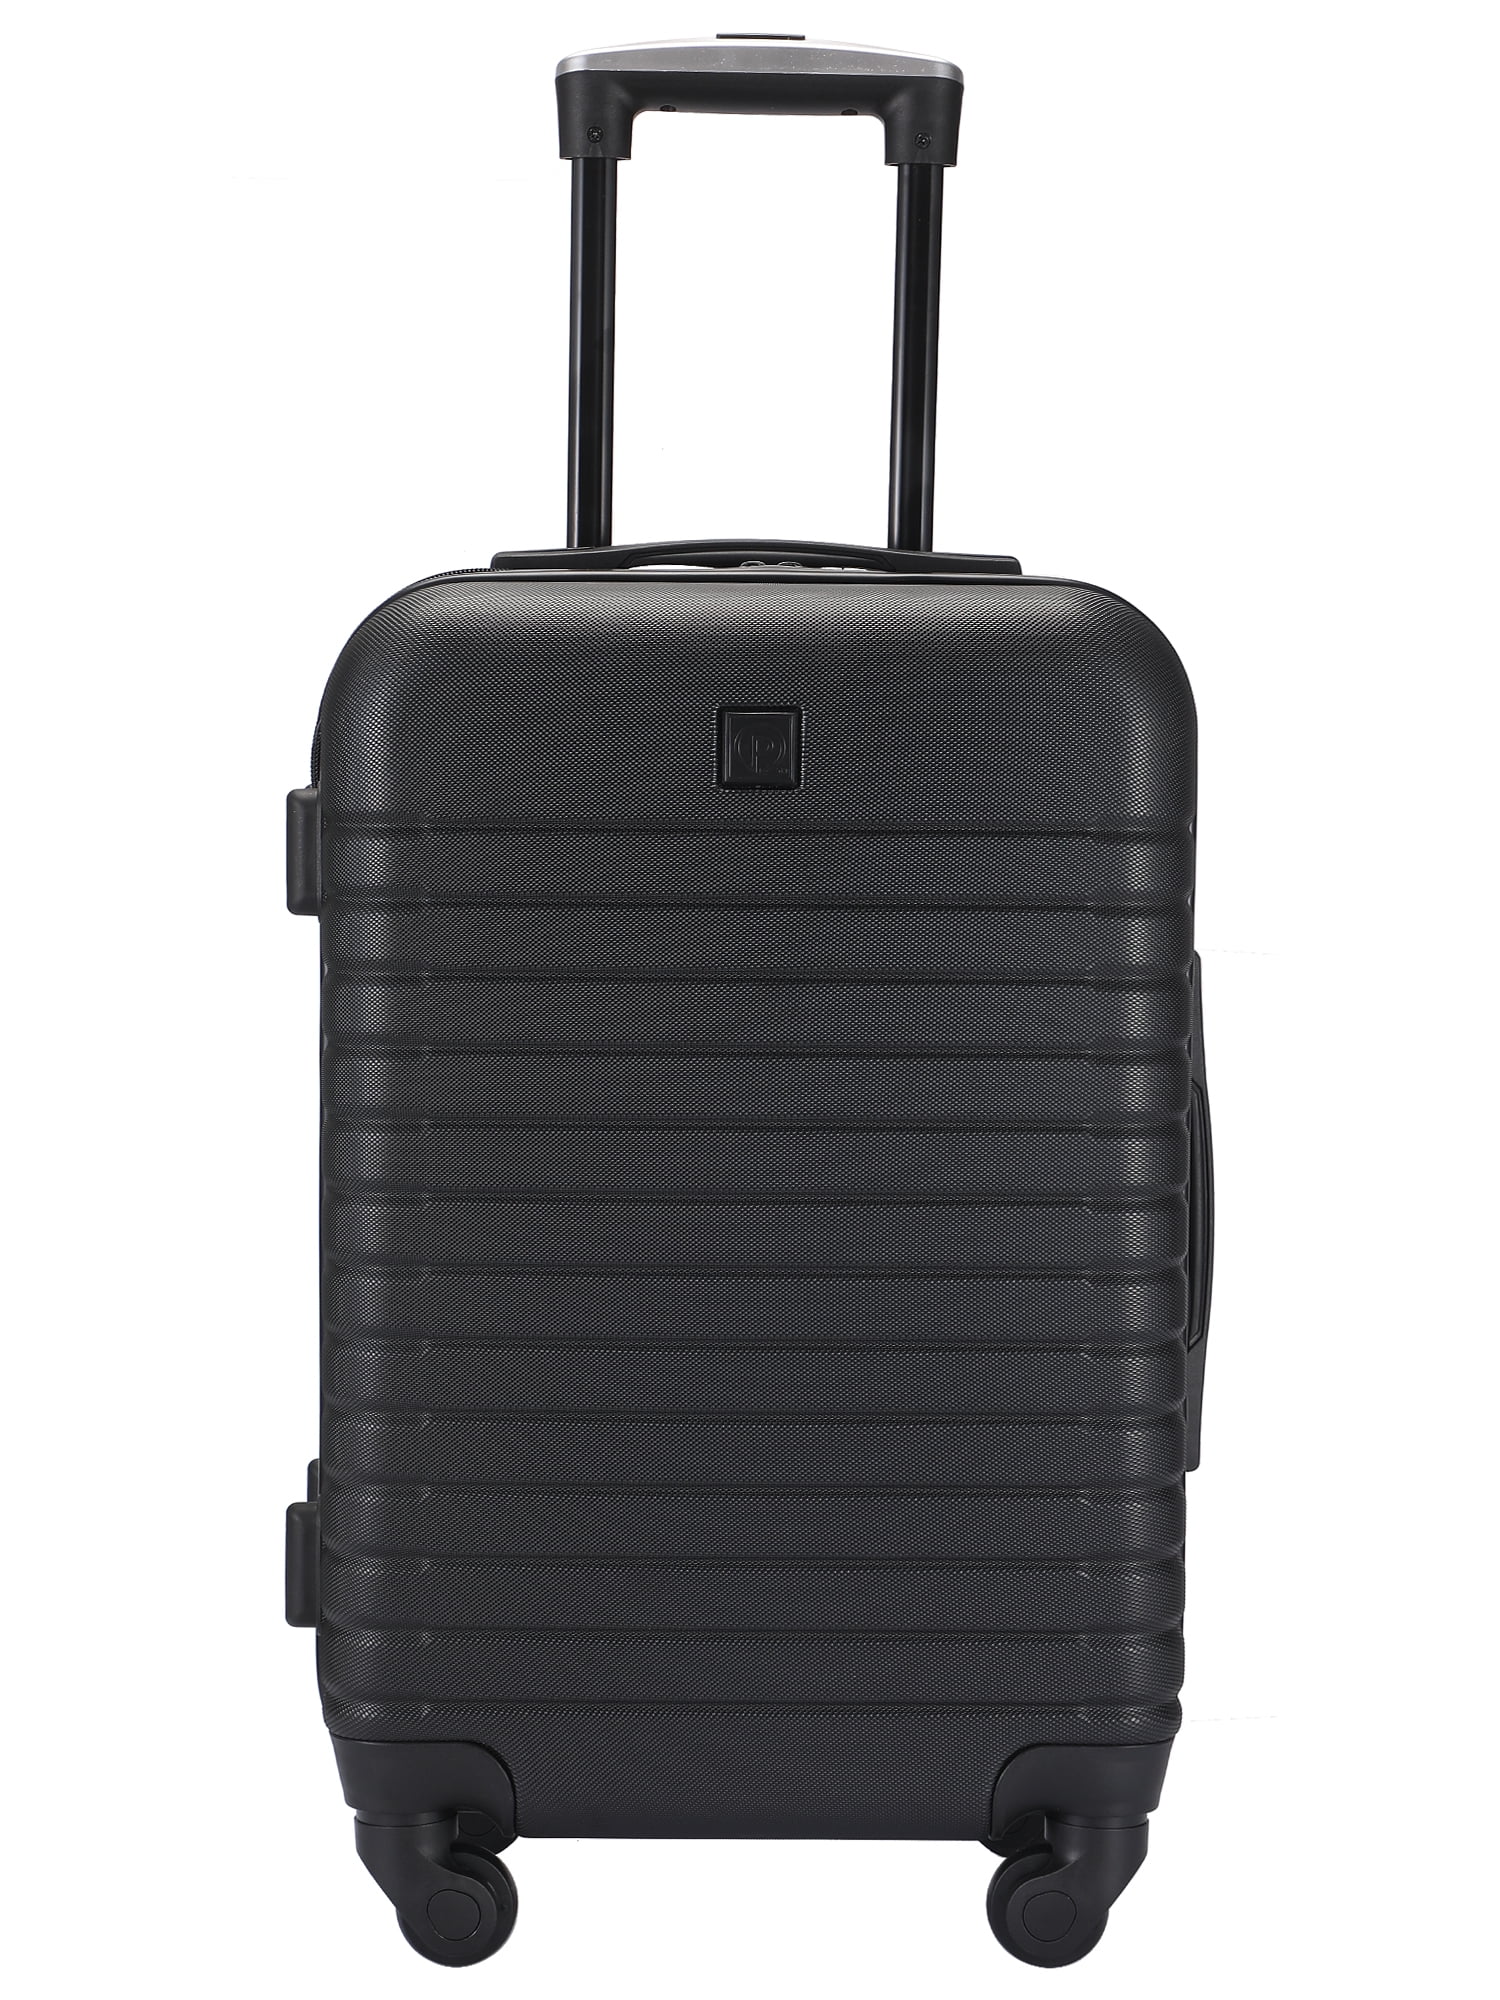 Protege 20" Hardside Carry-on Luggage